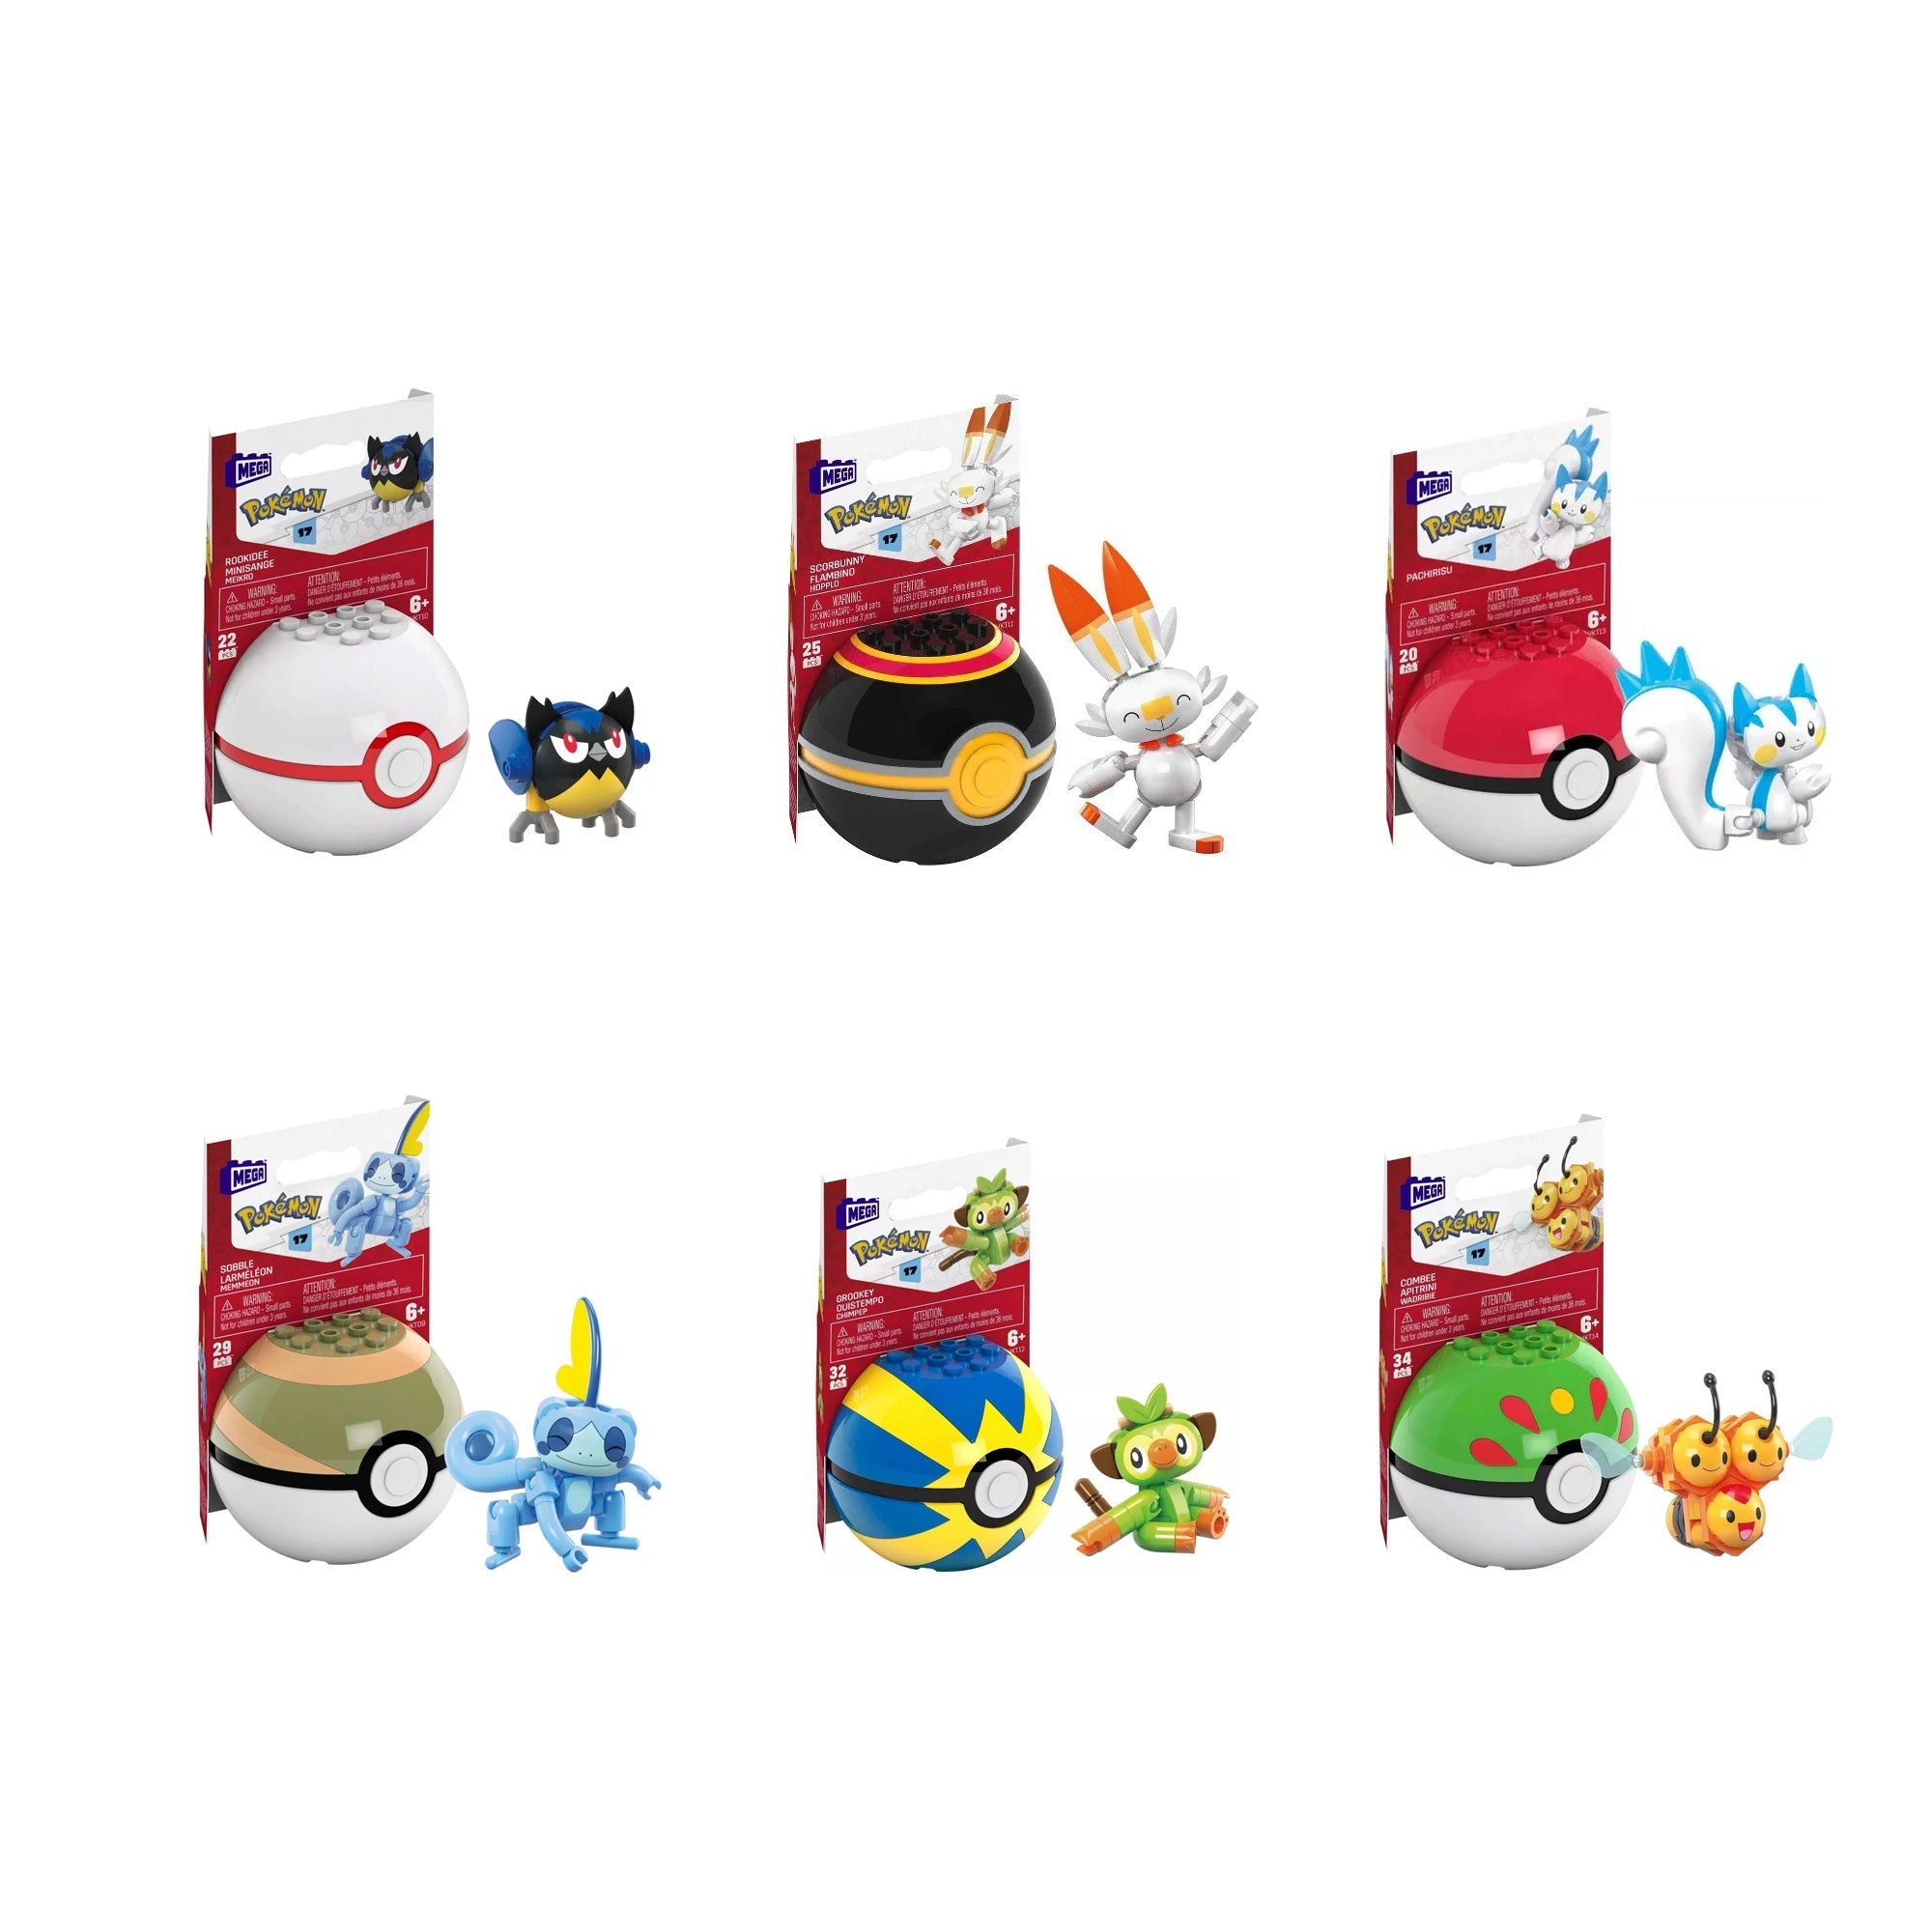 Pokemon Series 17 + Pikachu evolution set. : r/megaconstrux